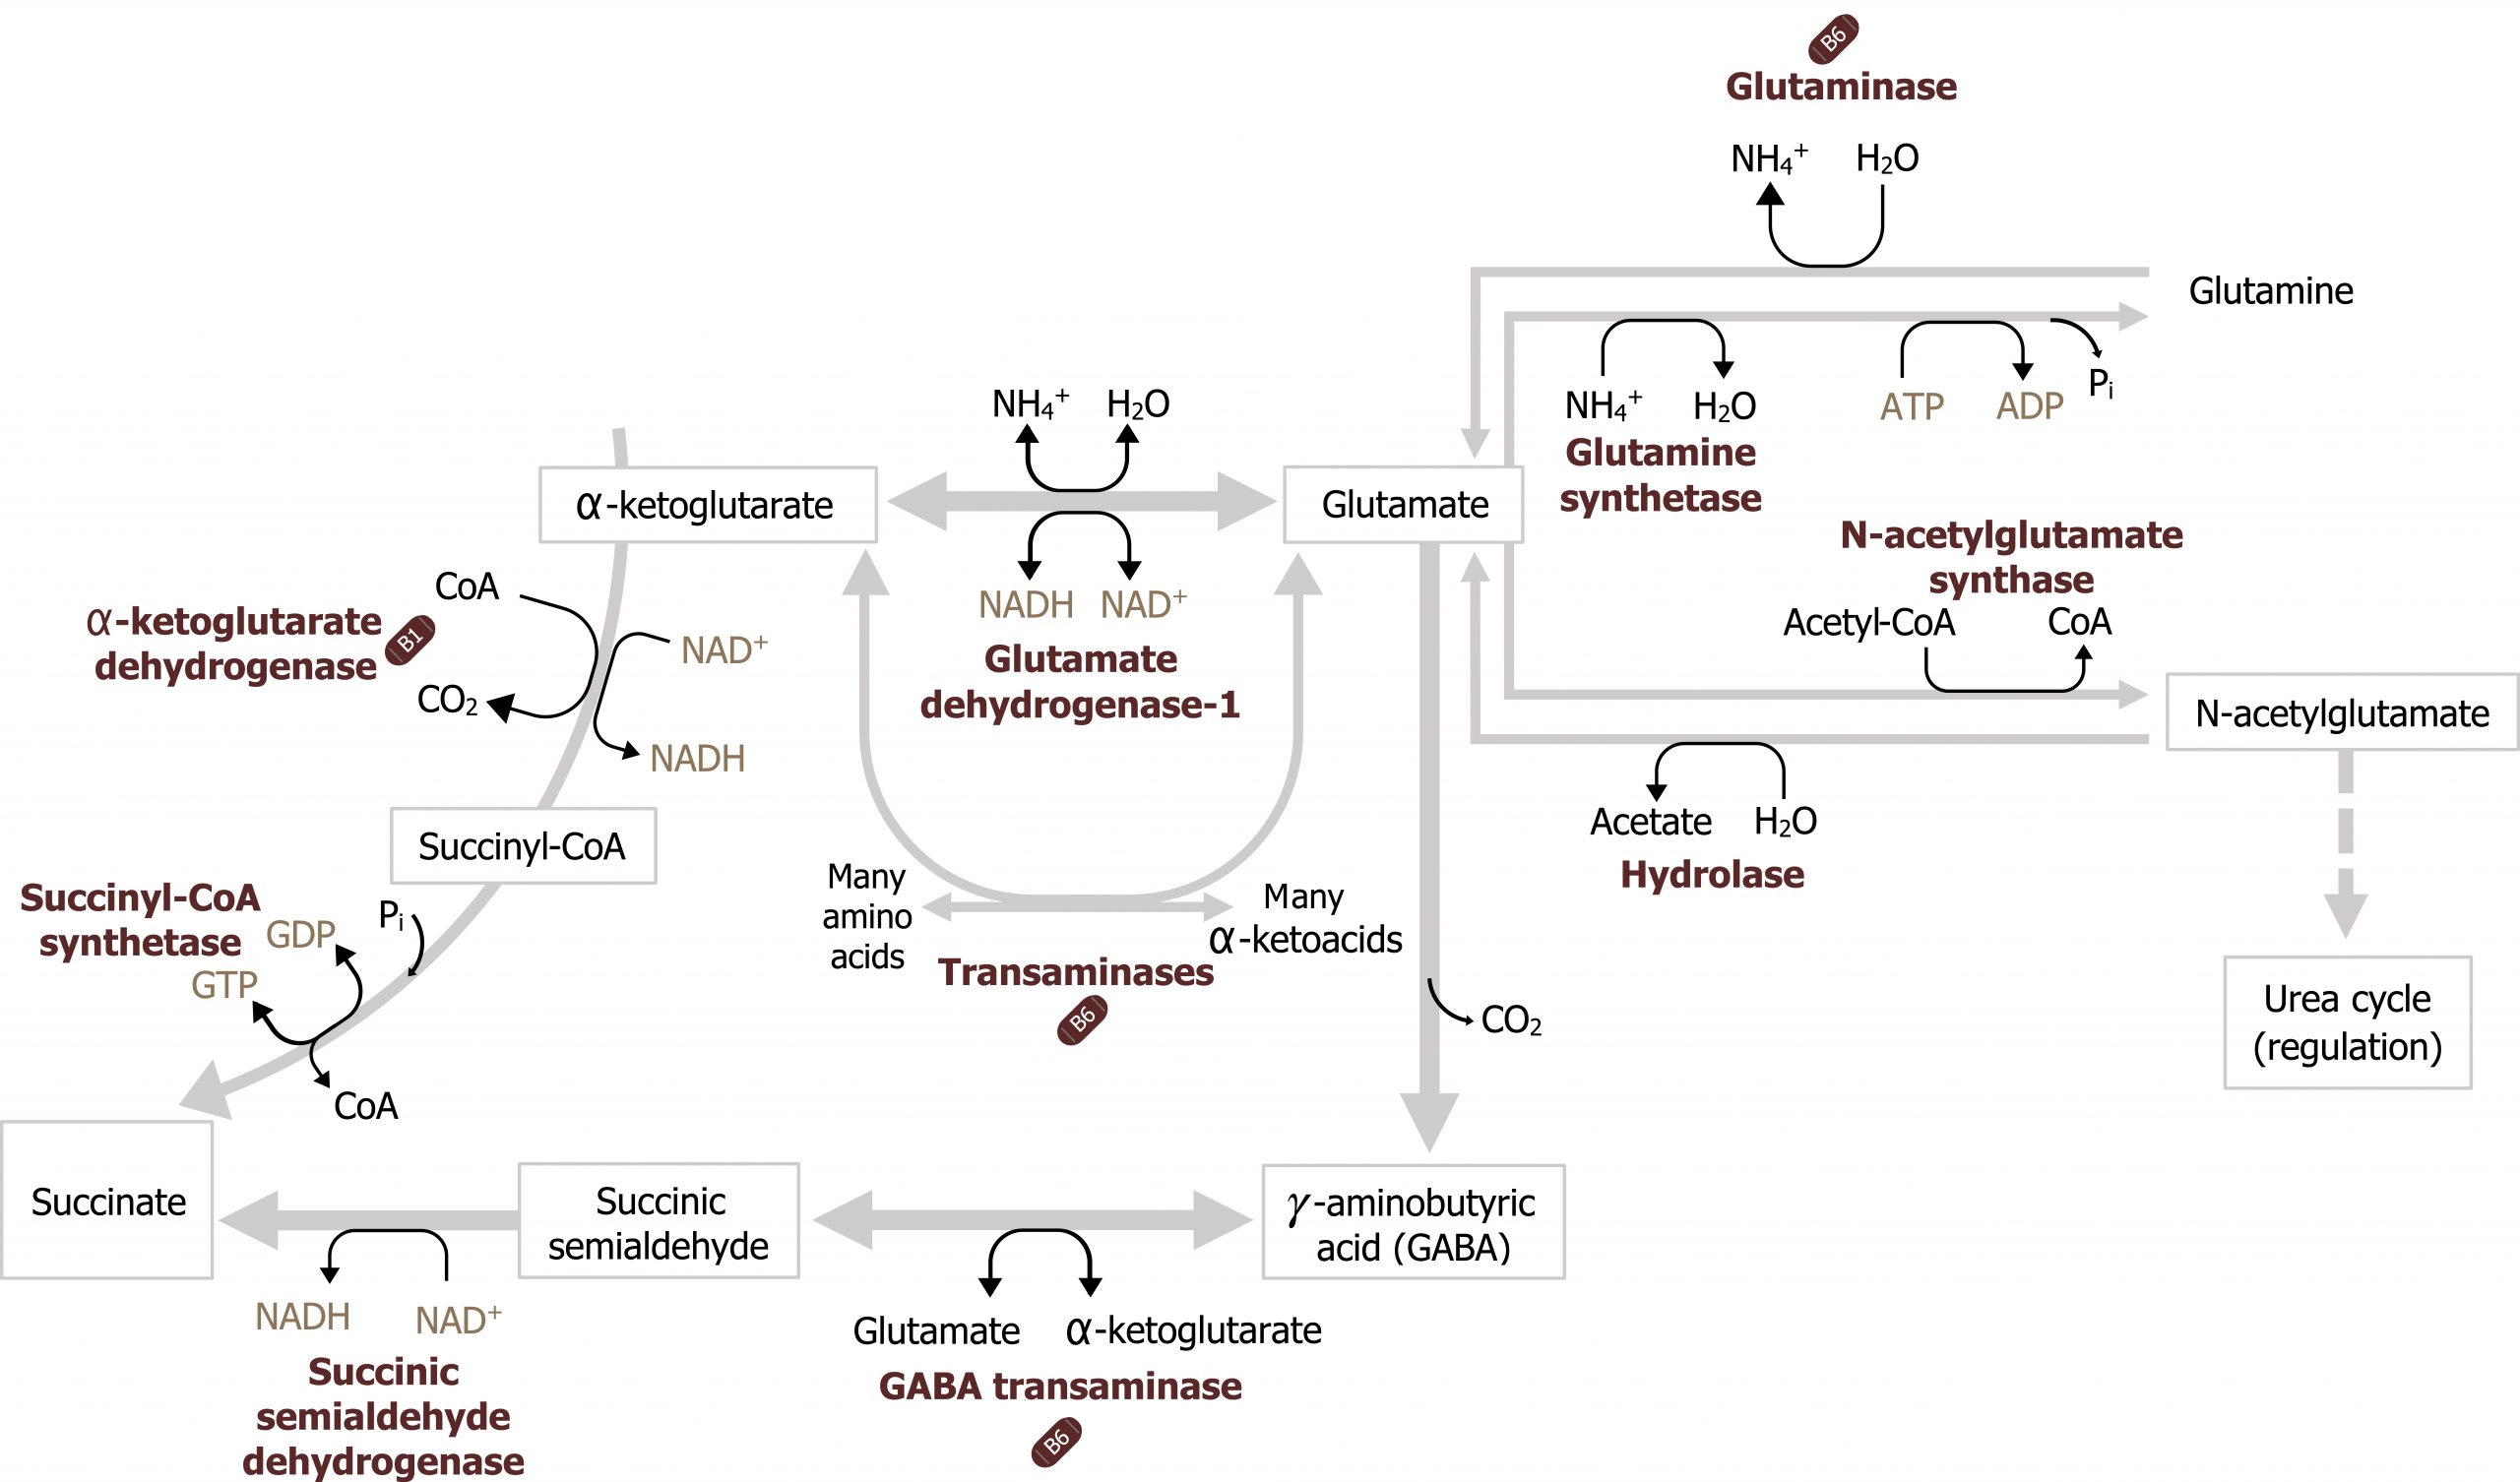 Glutamate arrow γ-aminobutyric acid (GABA) with CO2 loss bidirectional arrow enzyme GABA transaminase with glutamate bidirectional arrow α-ketoglutarate to succinic semialdehyde arrow enzyme succinic semialdehyde dehydrogenase with NAD+ arrow NADH to succinate. Glutamate bidirectional arrow enzyme glutamate dehydrogenase-1 with H2O bidirectional arrow NH4+ and NAD+ bidirectional arrow NADH to α-ketoglutarate arrow enzyme α-ketoglutarate dehydrogenase with NAD+ arrow NADH and CoA arrow CO2 to succinyl-CoA arrow enzyme succinyl-coA synthetase with Pi addition, GDP bidirectional arrow GTP and loss of CoA to succinate. Glutamate arrow enzyme glutamine synthetase with NH4+ arrow H2O, ATP arrow ADP, and loss of Pi to glutamine arrow enzyme glutaminase with H2O arrow NH4+ to glutamate. Glutamate arrow enzyme N-acetylglutamate synthase with acetyl-CoA arrow CoA to N-acetylglutamate arrow enzyme hydrolase with H2O arrow acetate to glutamate. N-acetylglutamate dotted arrow urea cycle (regulation)